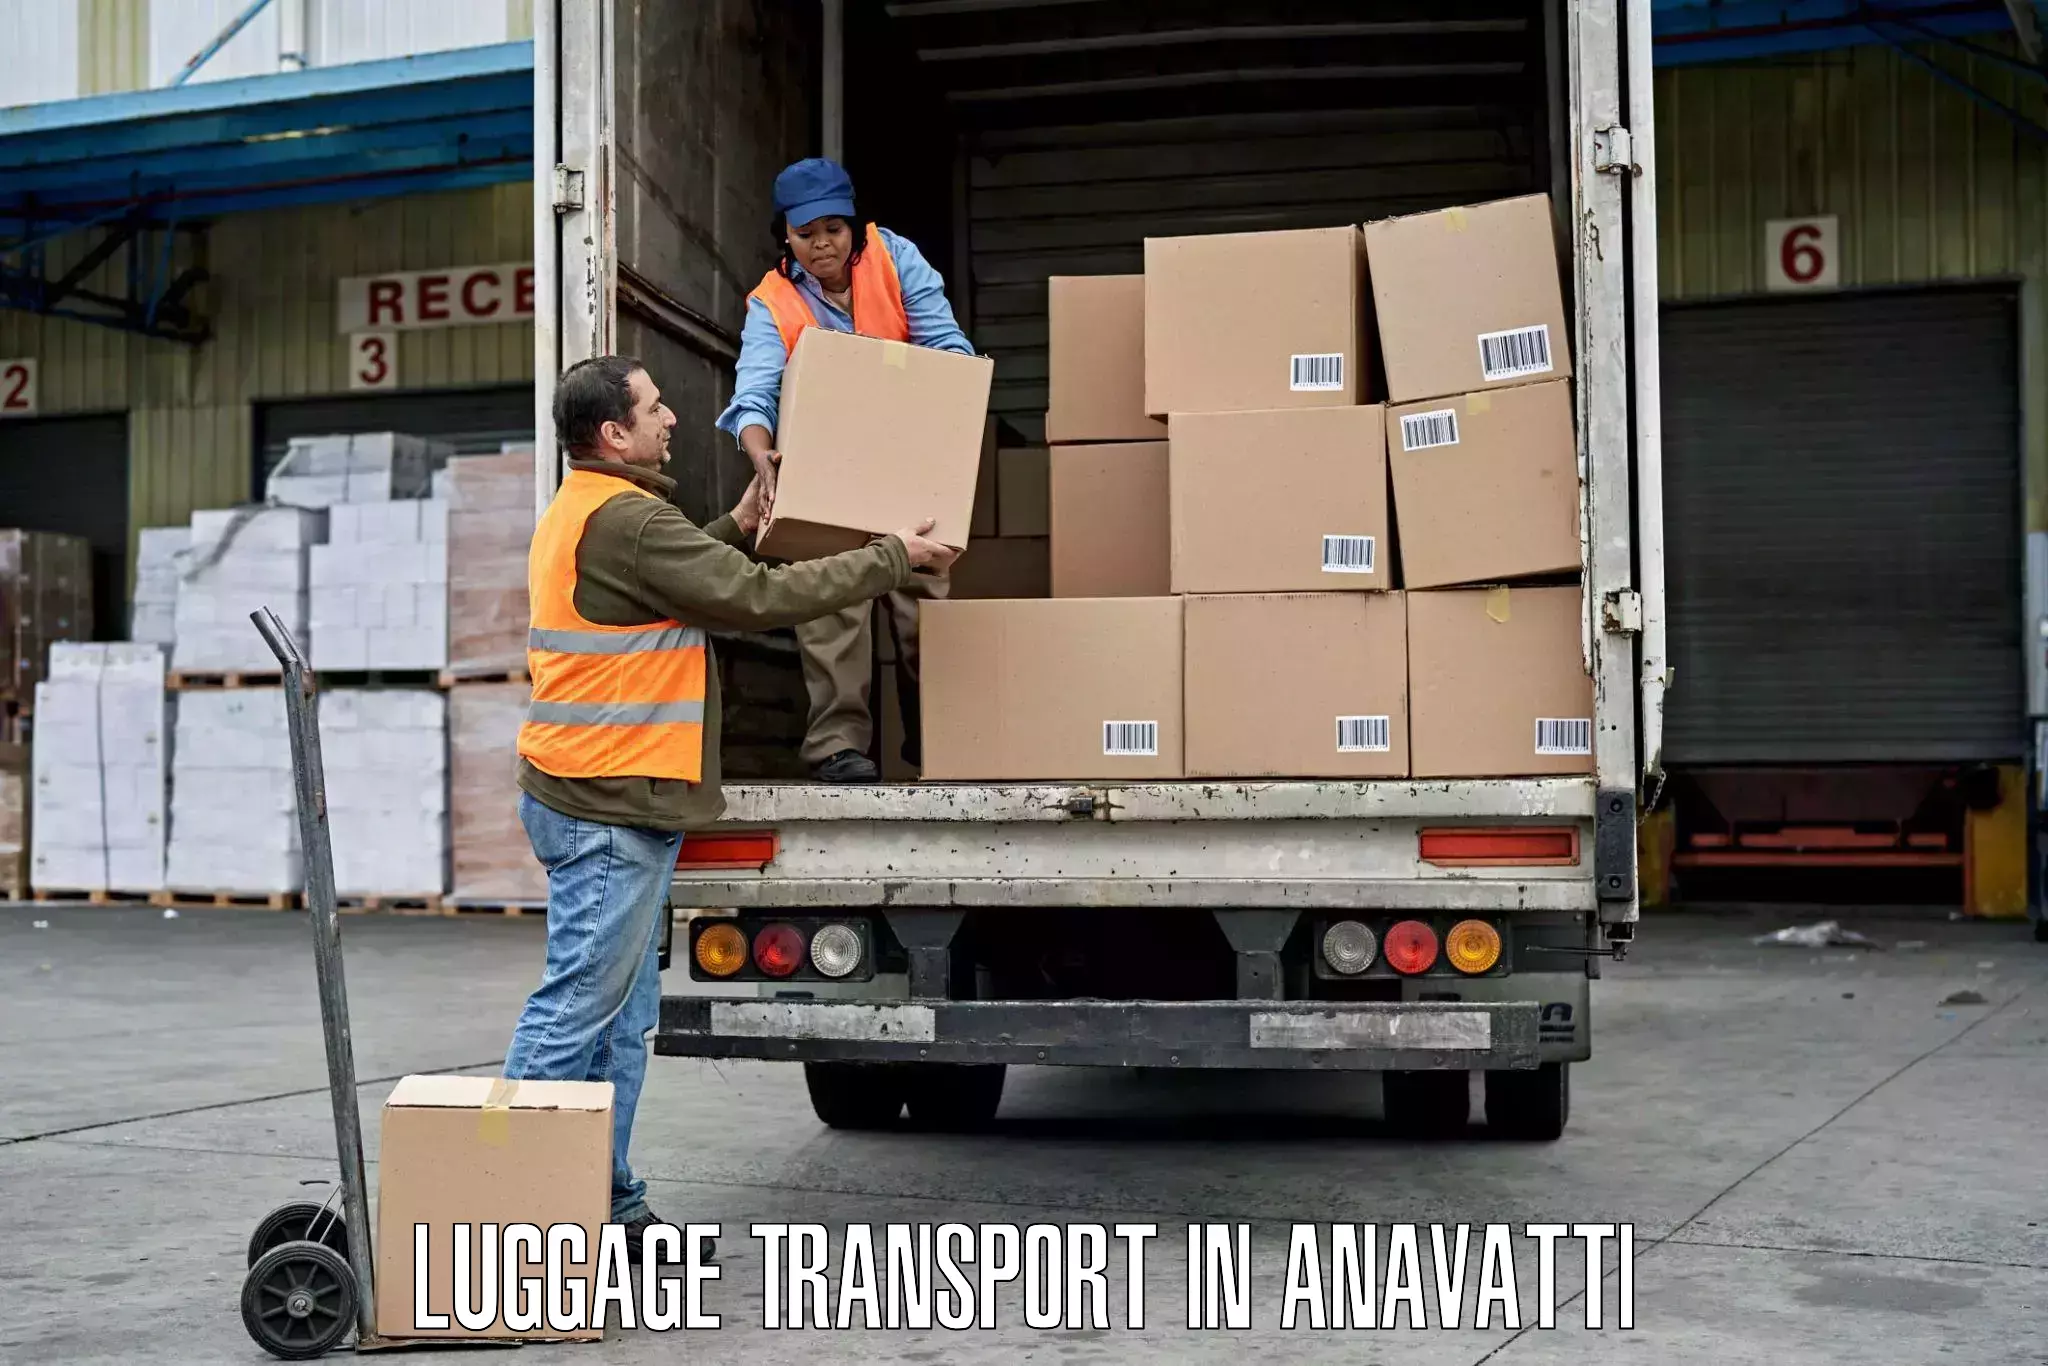 Professional baggage delivery in Anavatti